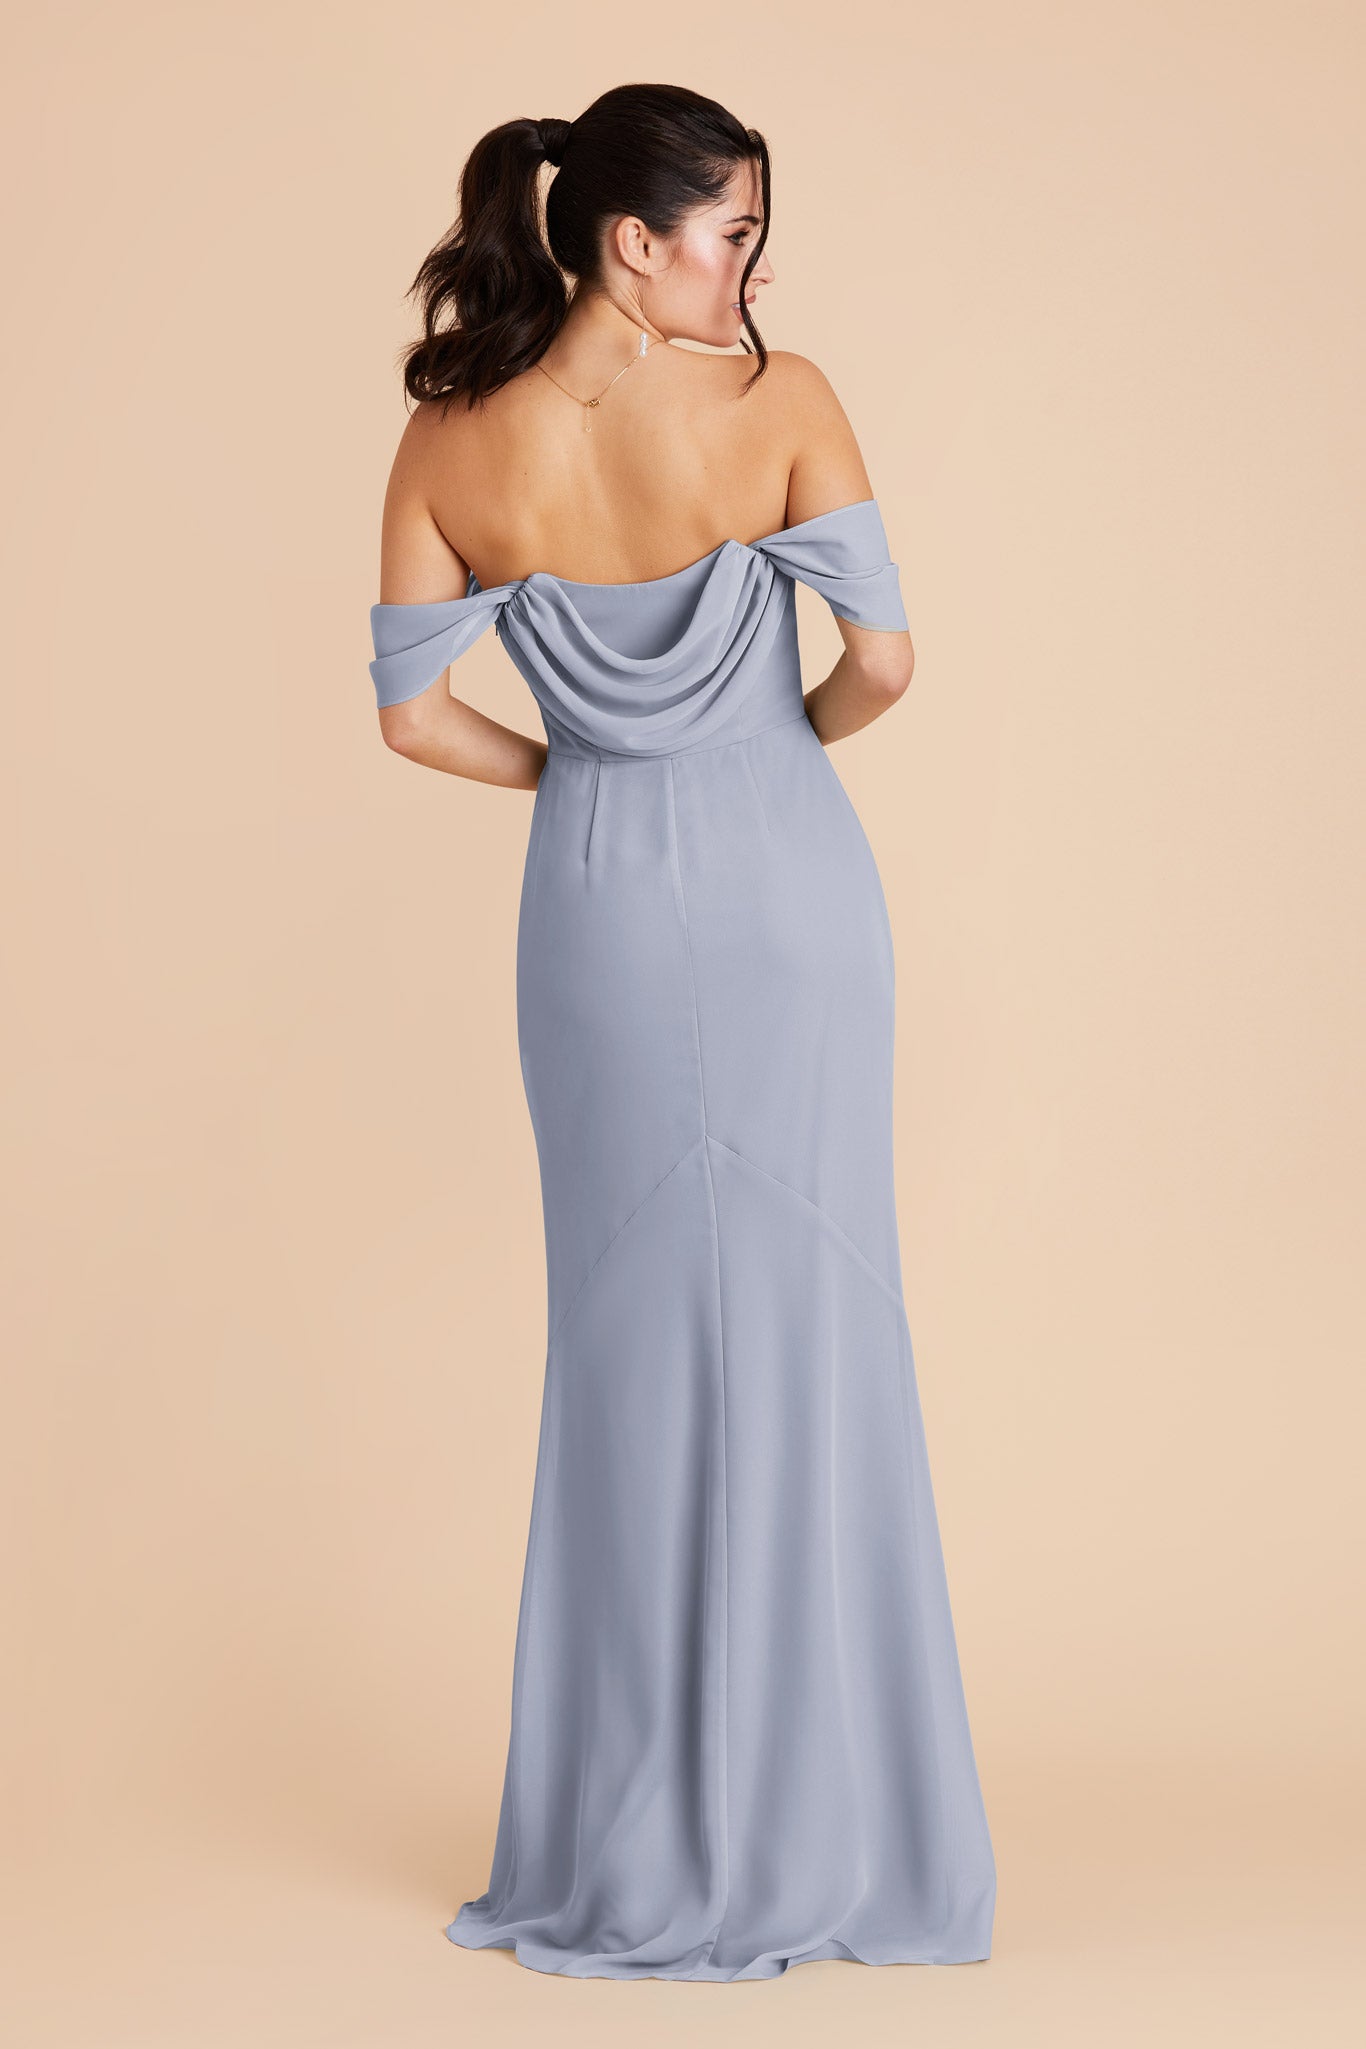 Mira Convertible Dress - Dusty Blue